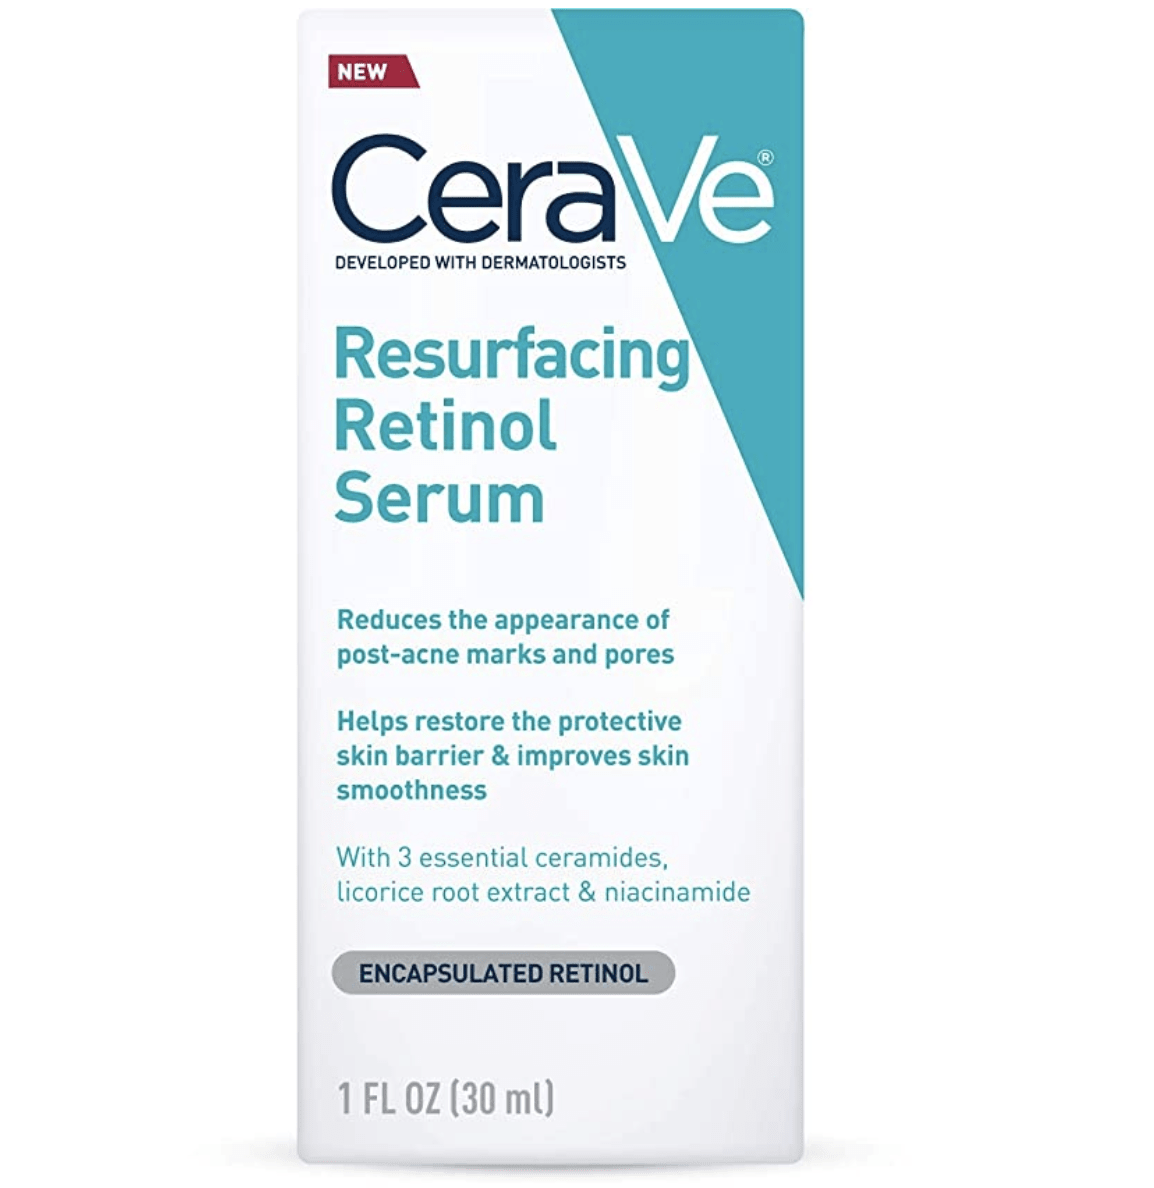 CeraVe Resurfacing Retinol Serum: Why you should it